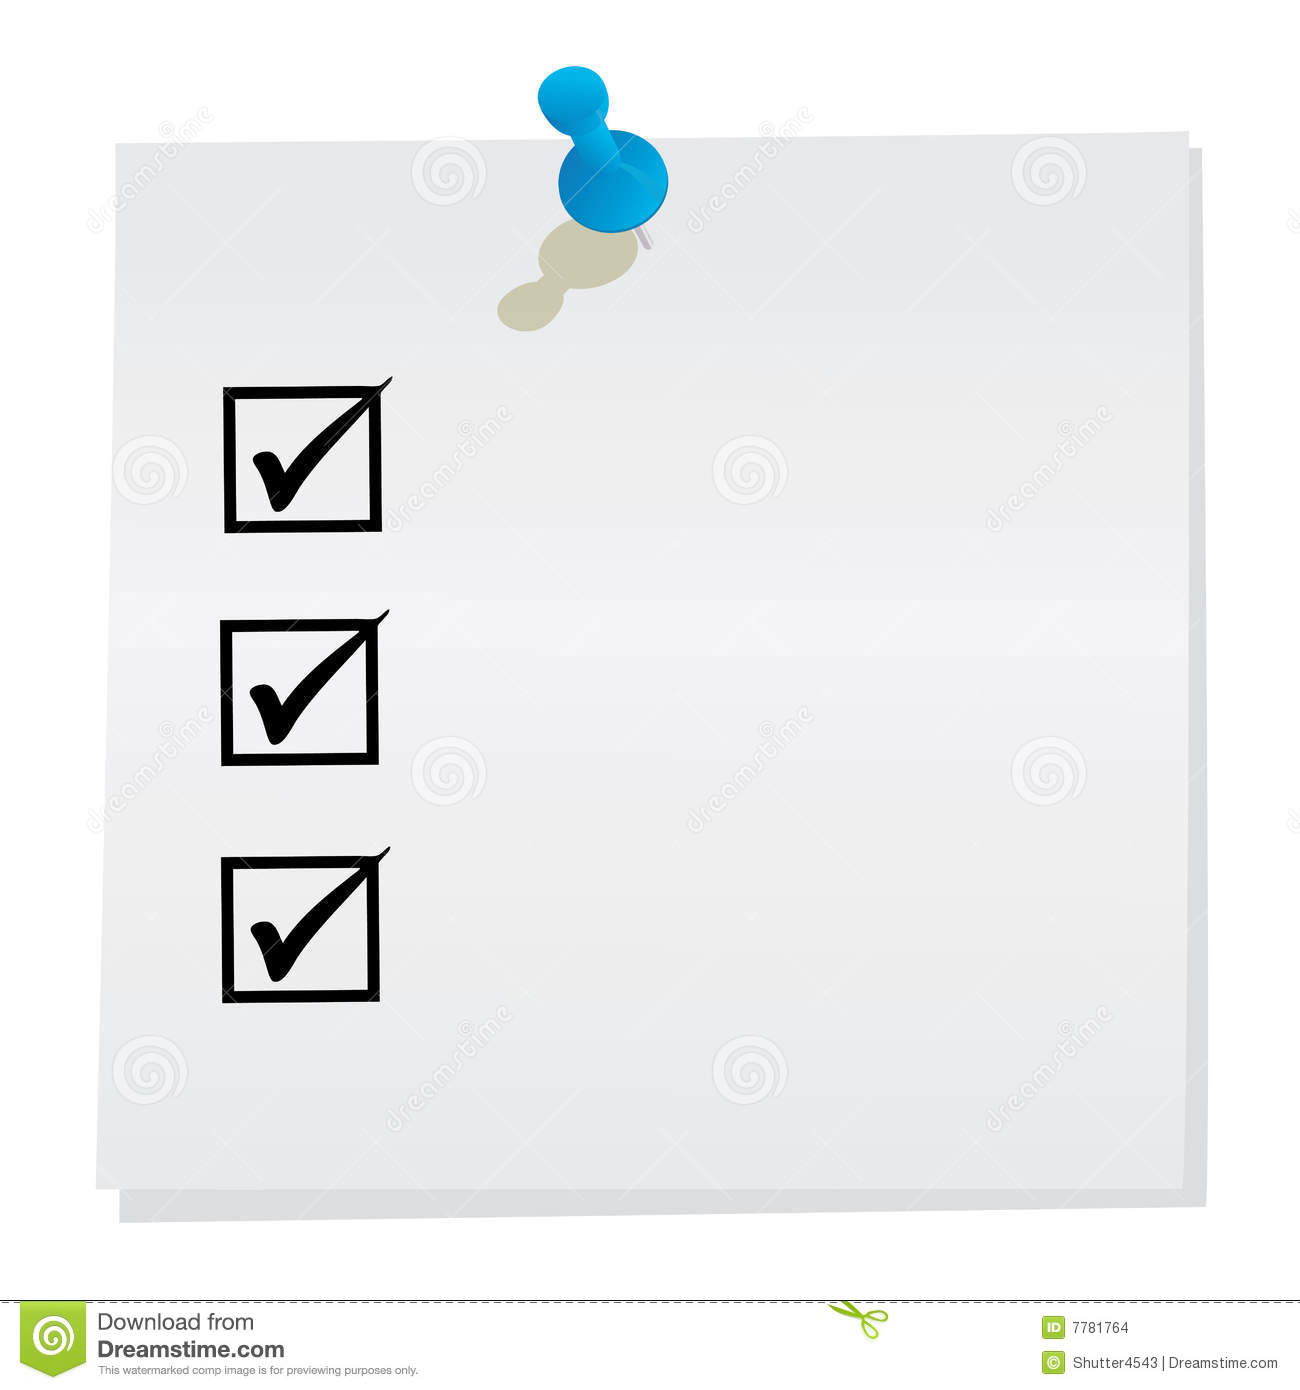 3d Render Illustration Of Checklist Symbol Written On Sticky Note